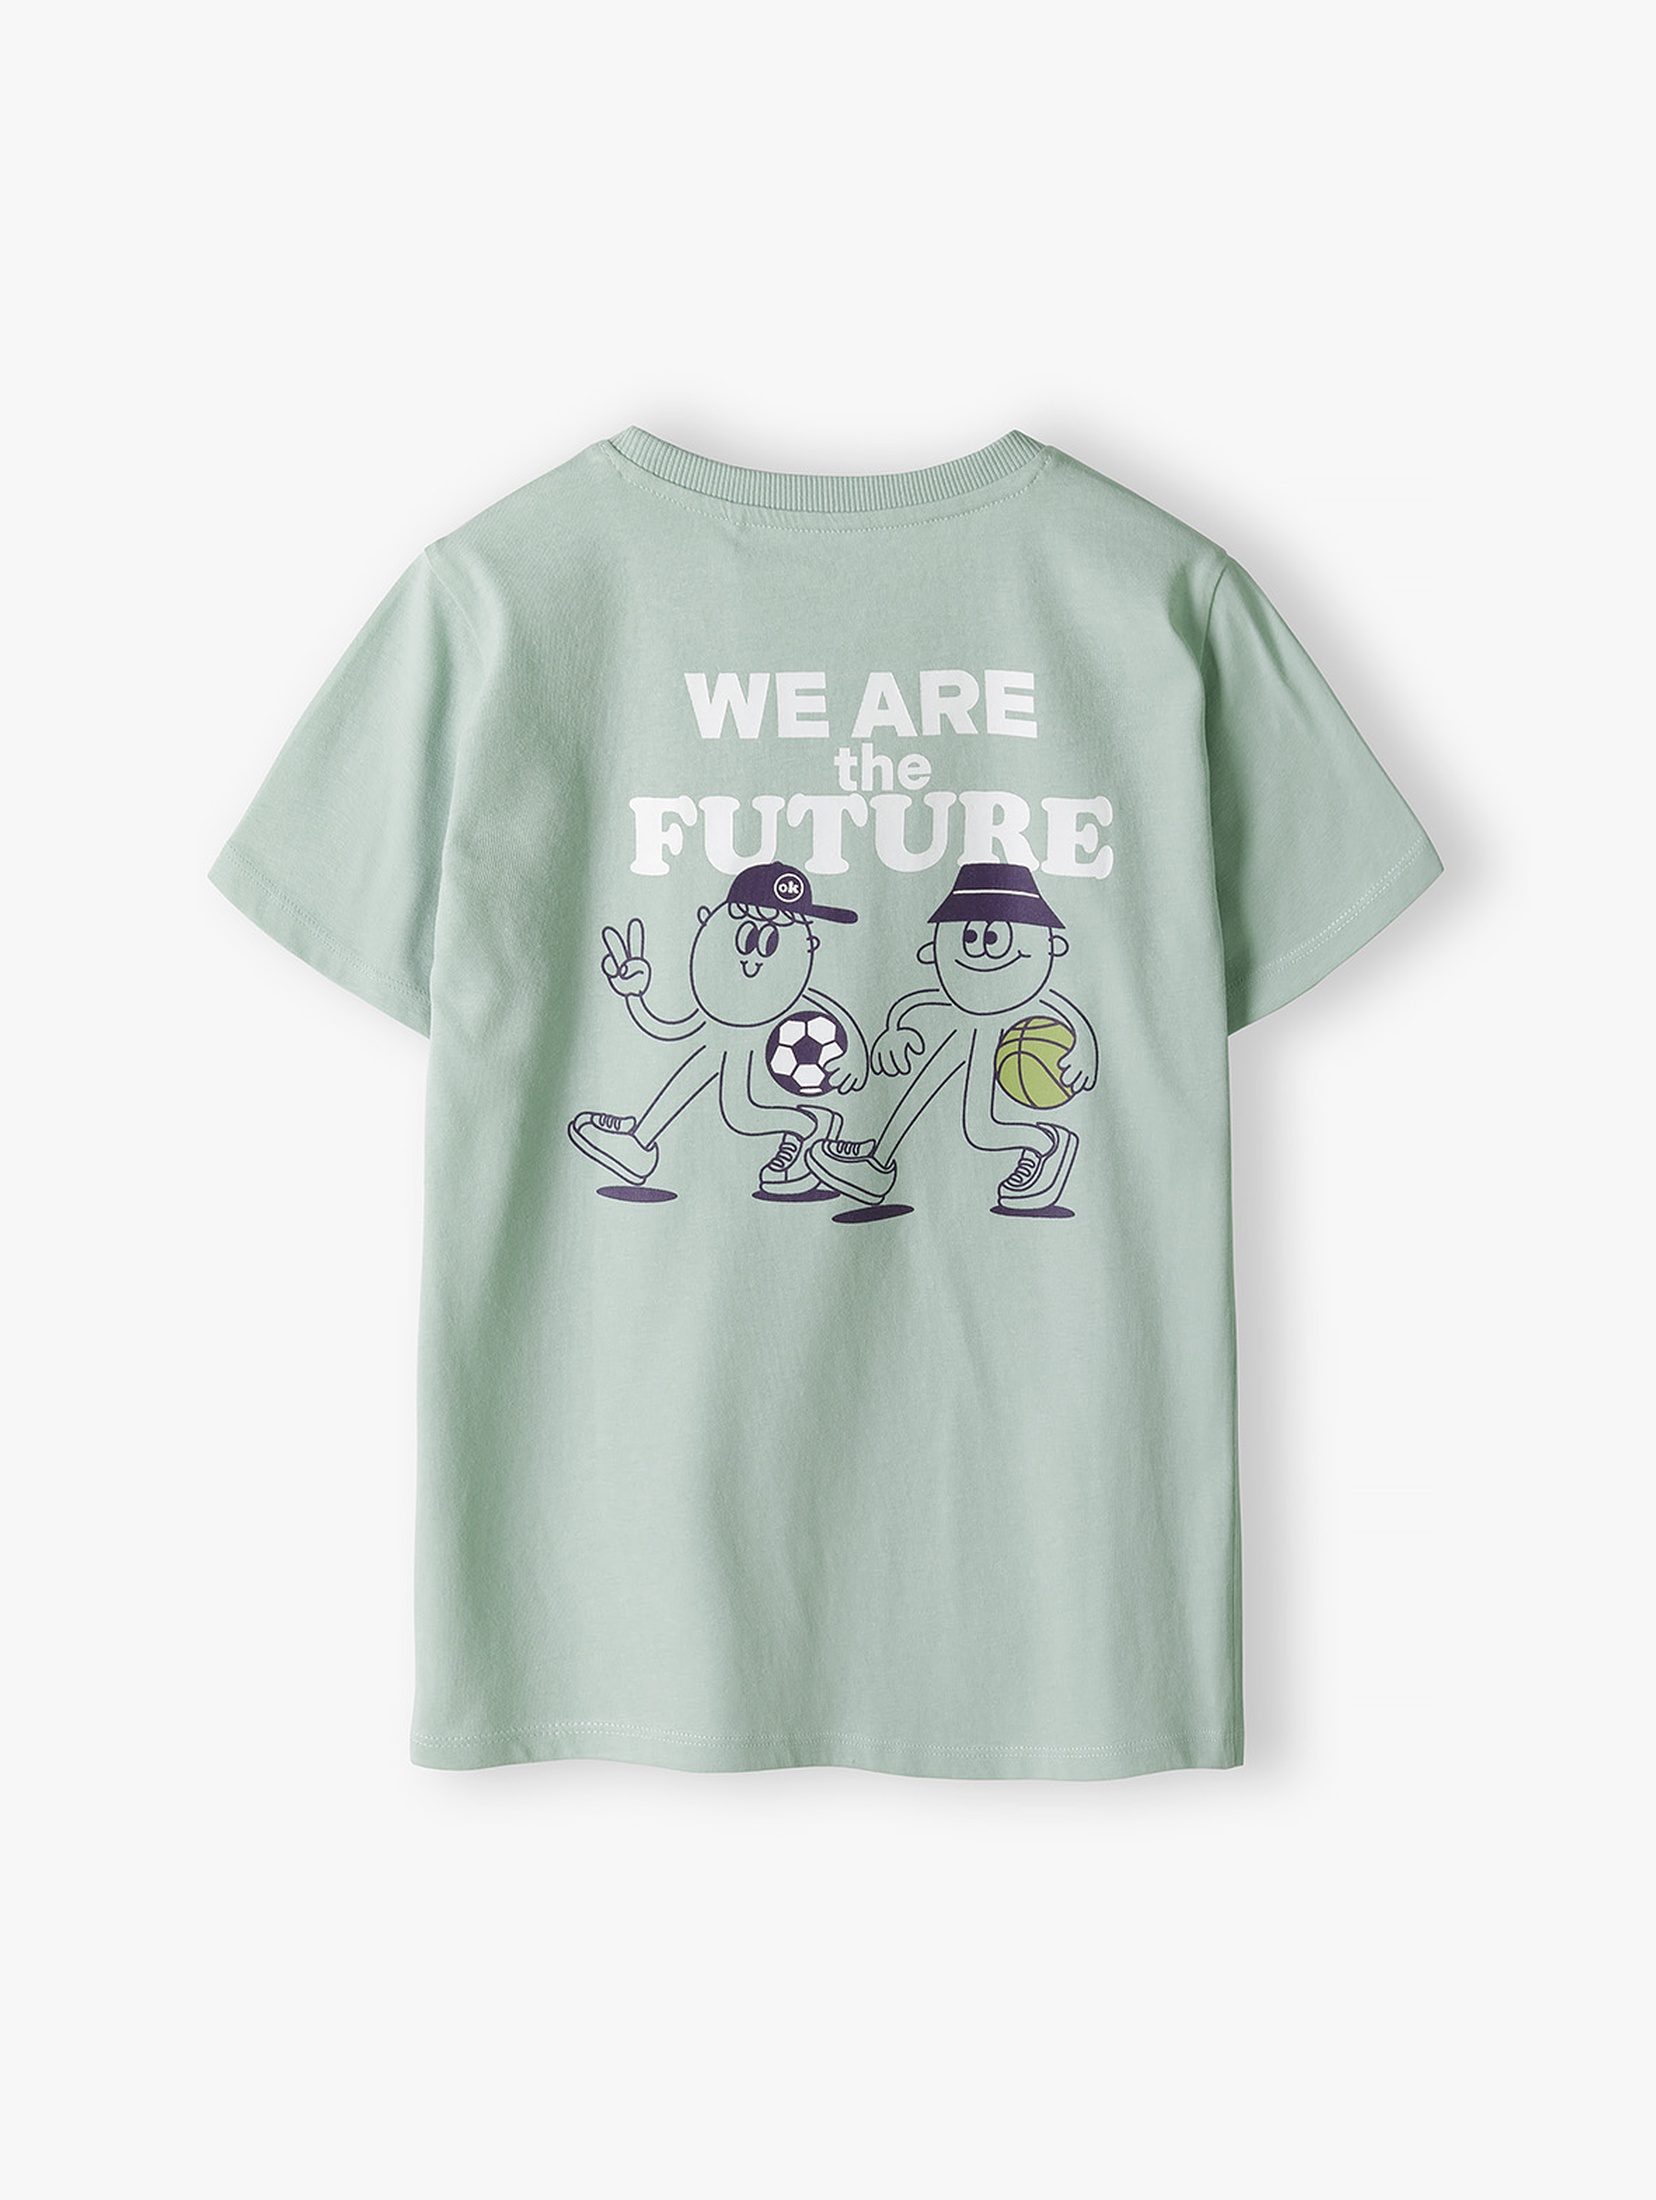 Zielony t-shirt chłopięcy - We are the future - 5.10.15.